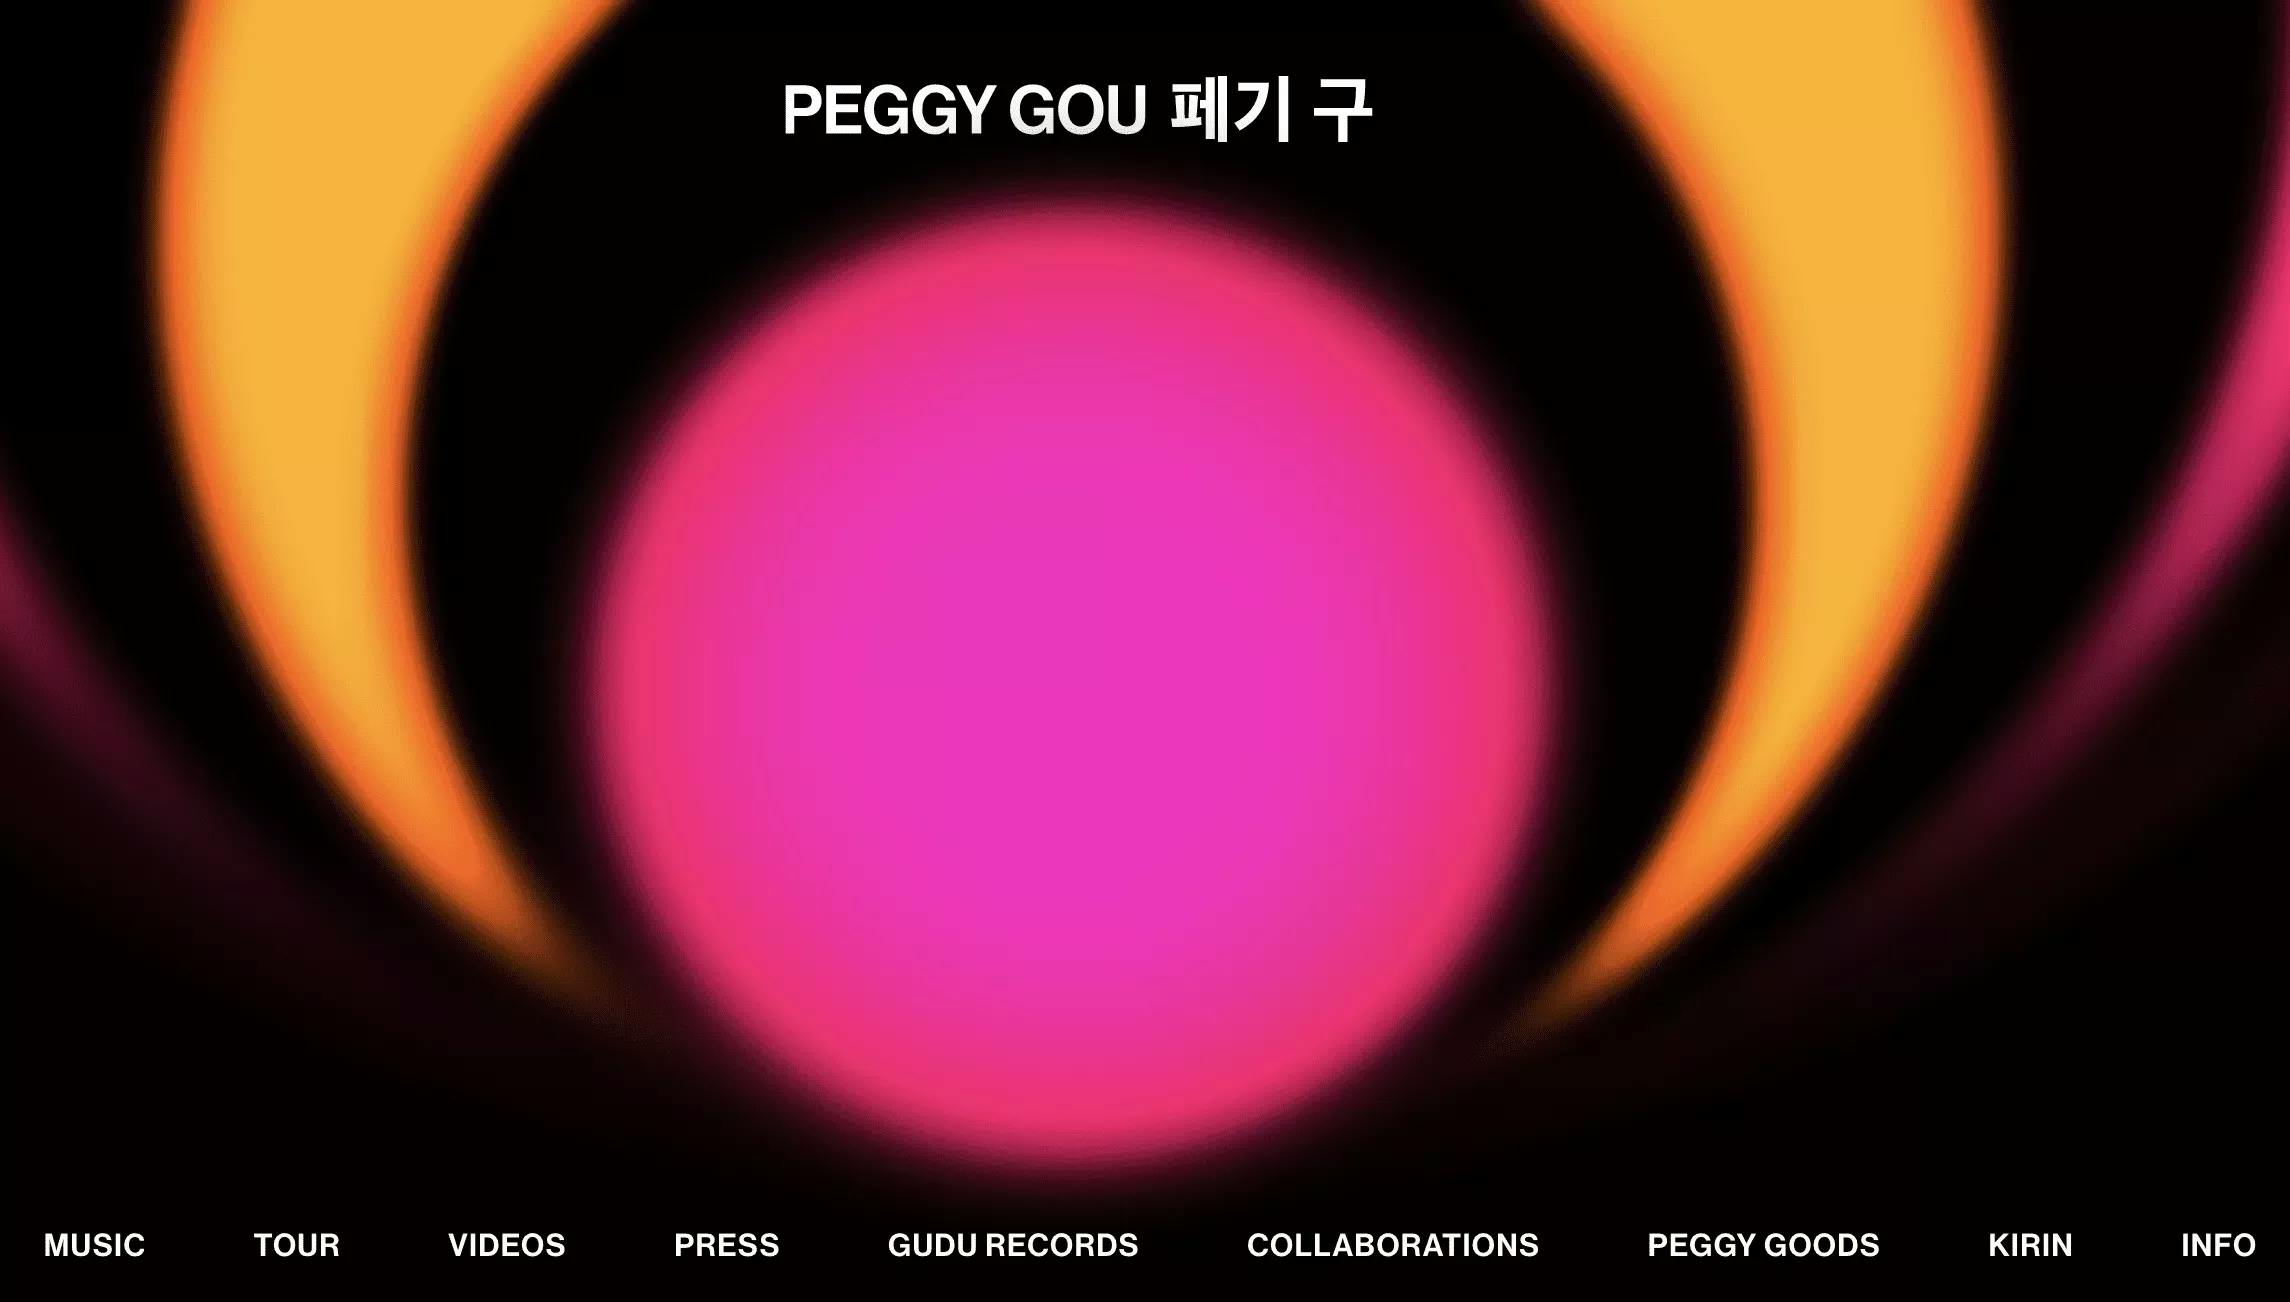 Artist Peggy Gou's website version of an electronic press kit